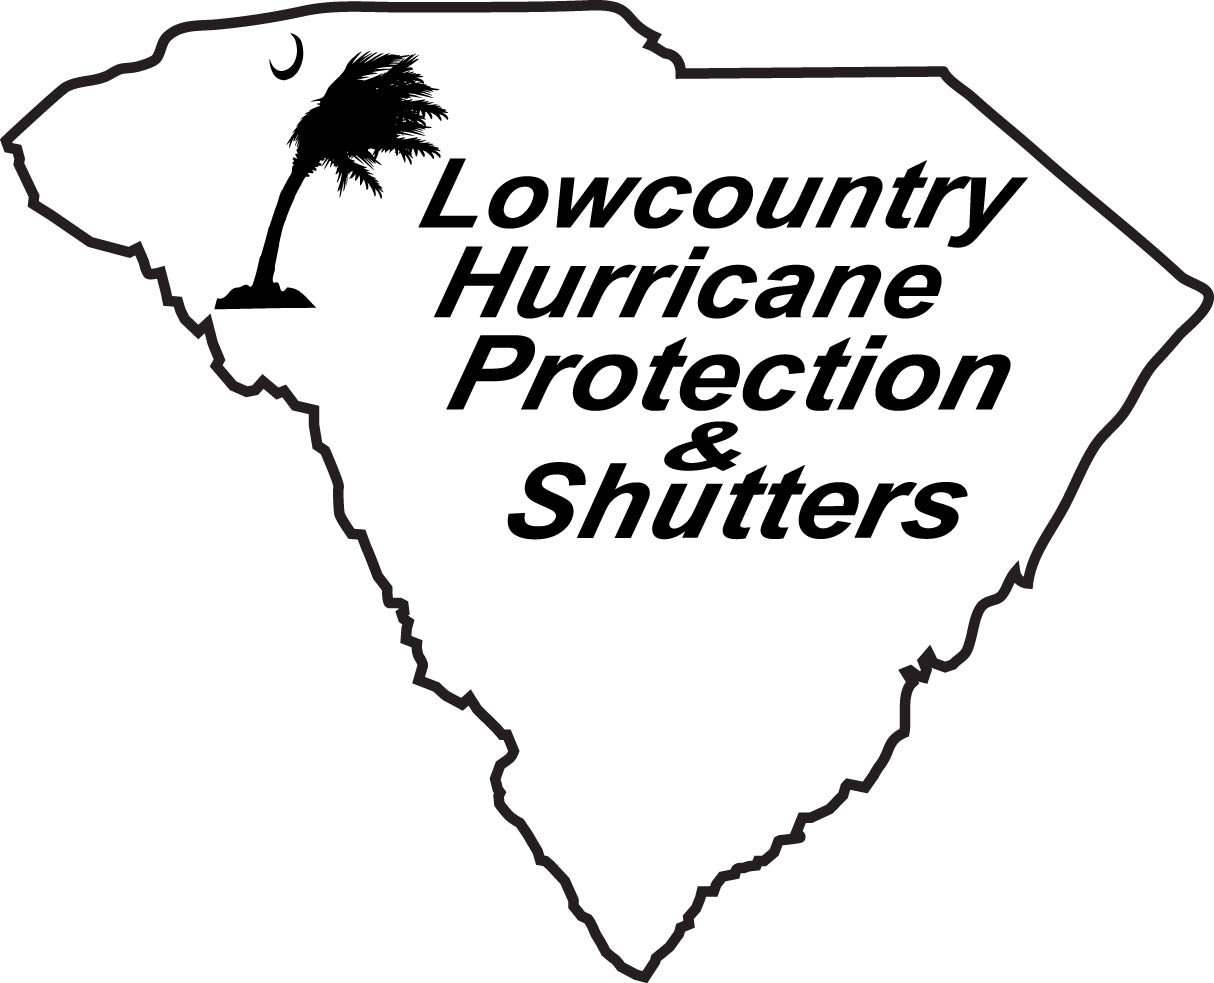 Lowcountry Hurricane and Shutters logo